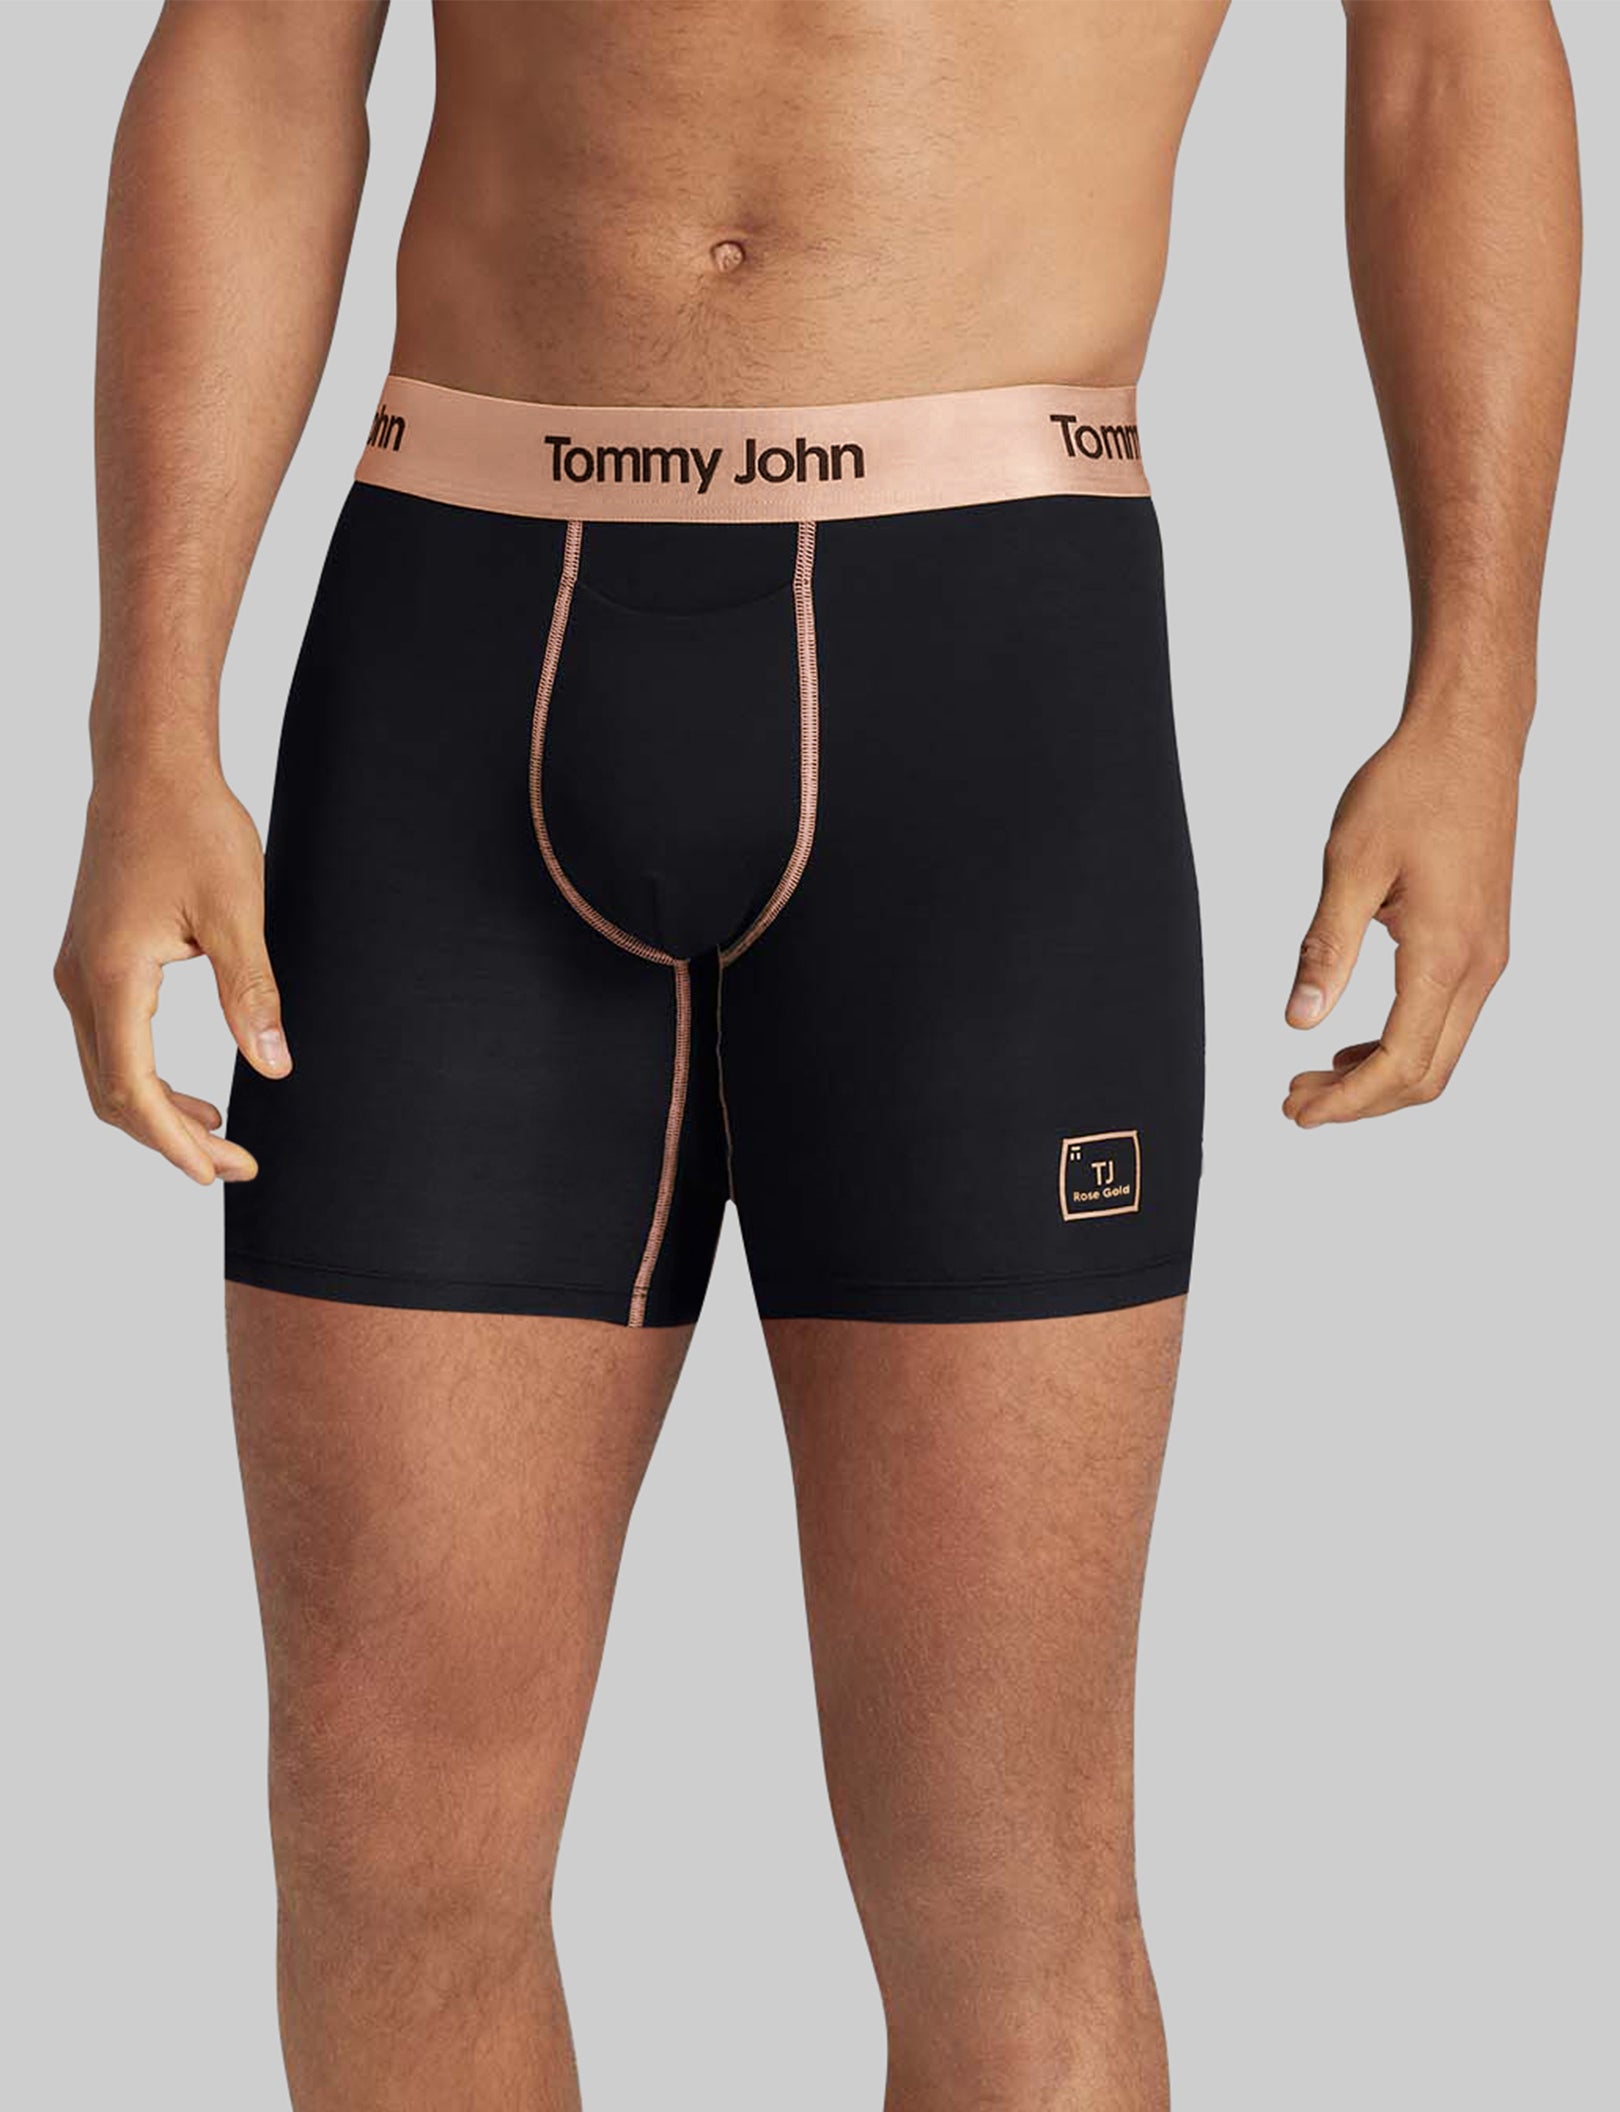 New Tommy John Second Skin Men's Boxer Brief Underwear Large – St